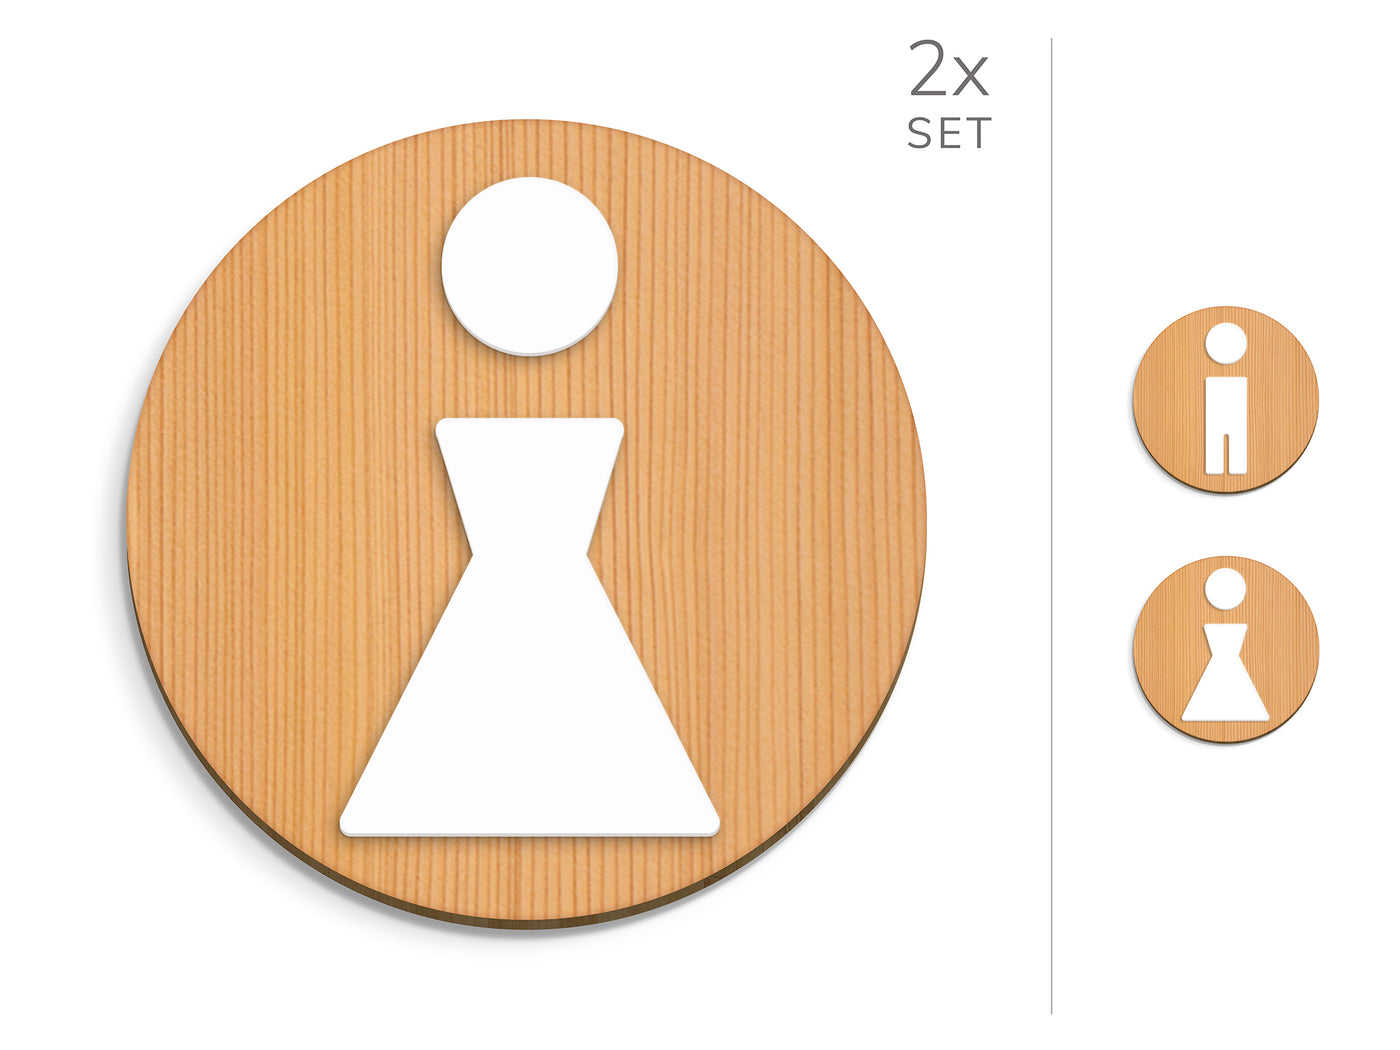 Polygonal, 2x Round Base - Restroom Signs Set - Man, Woman